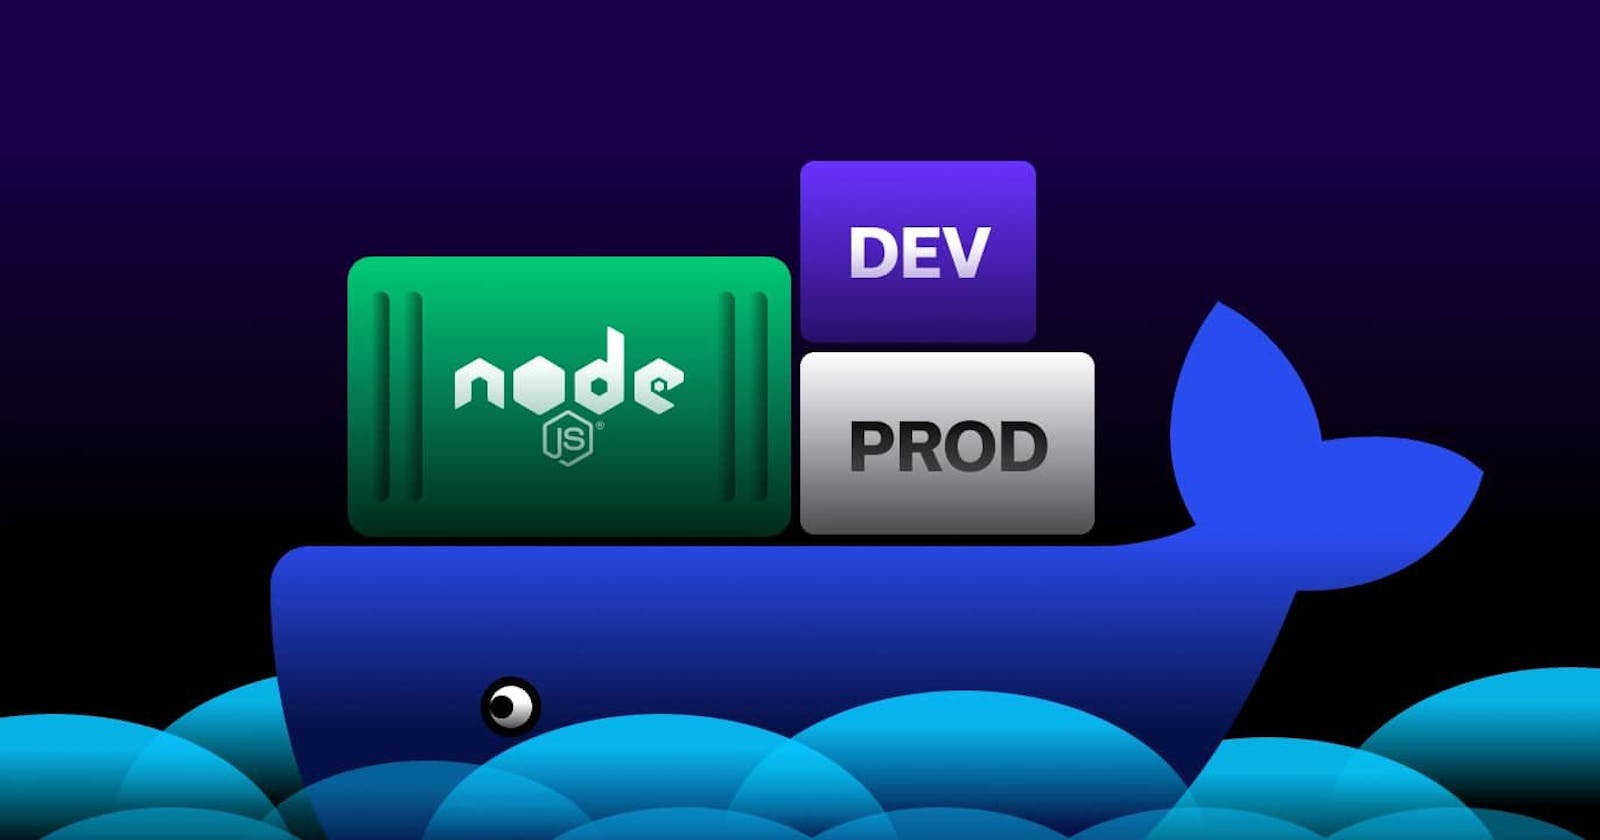 Dockerizing Node.js Applications: A Practical Step-by-Step Walkthrough